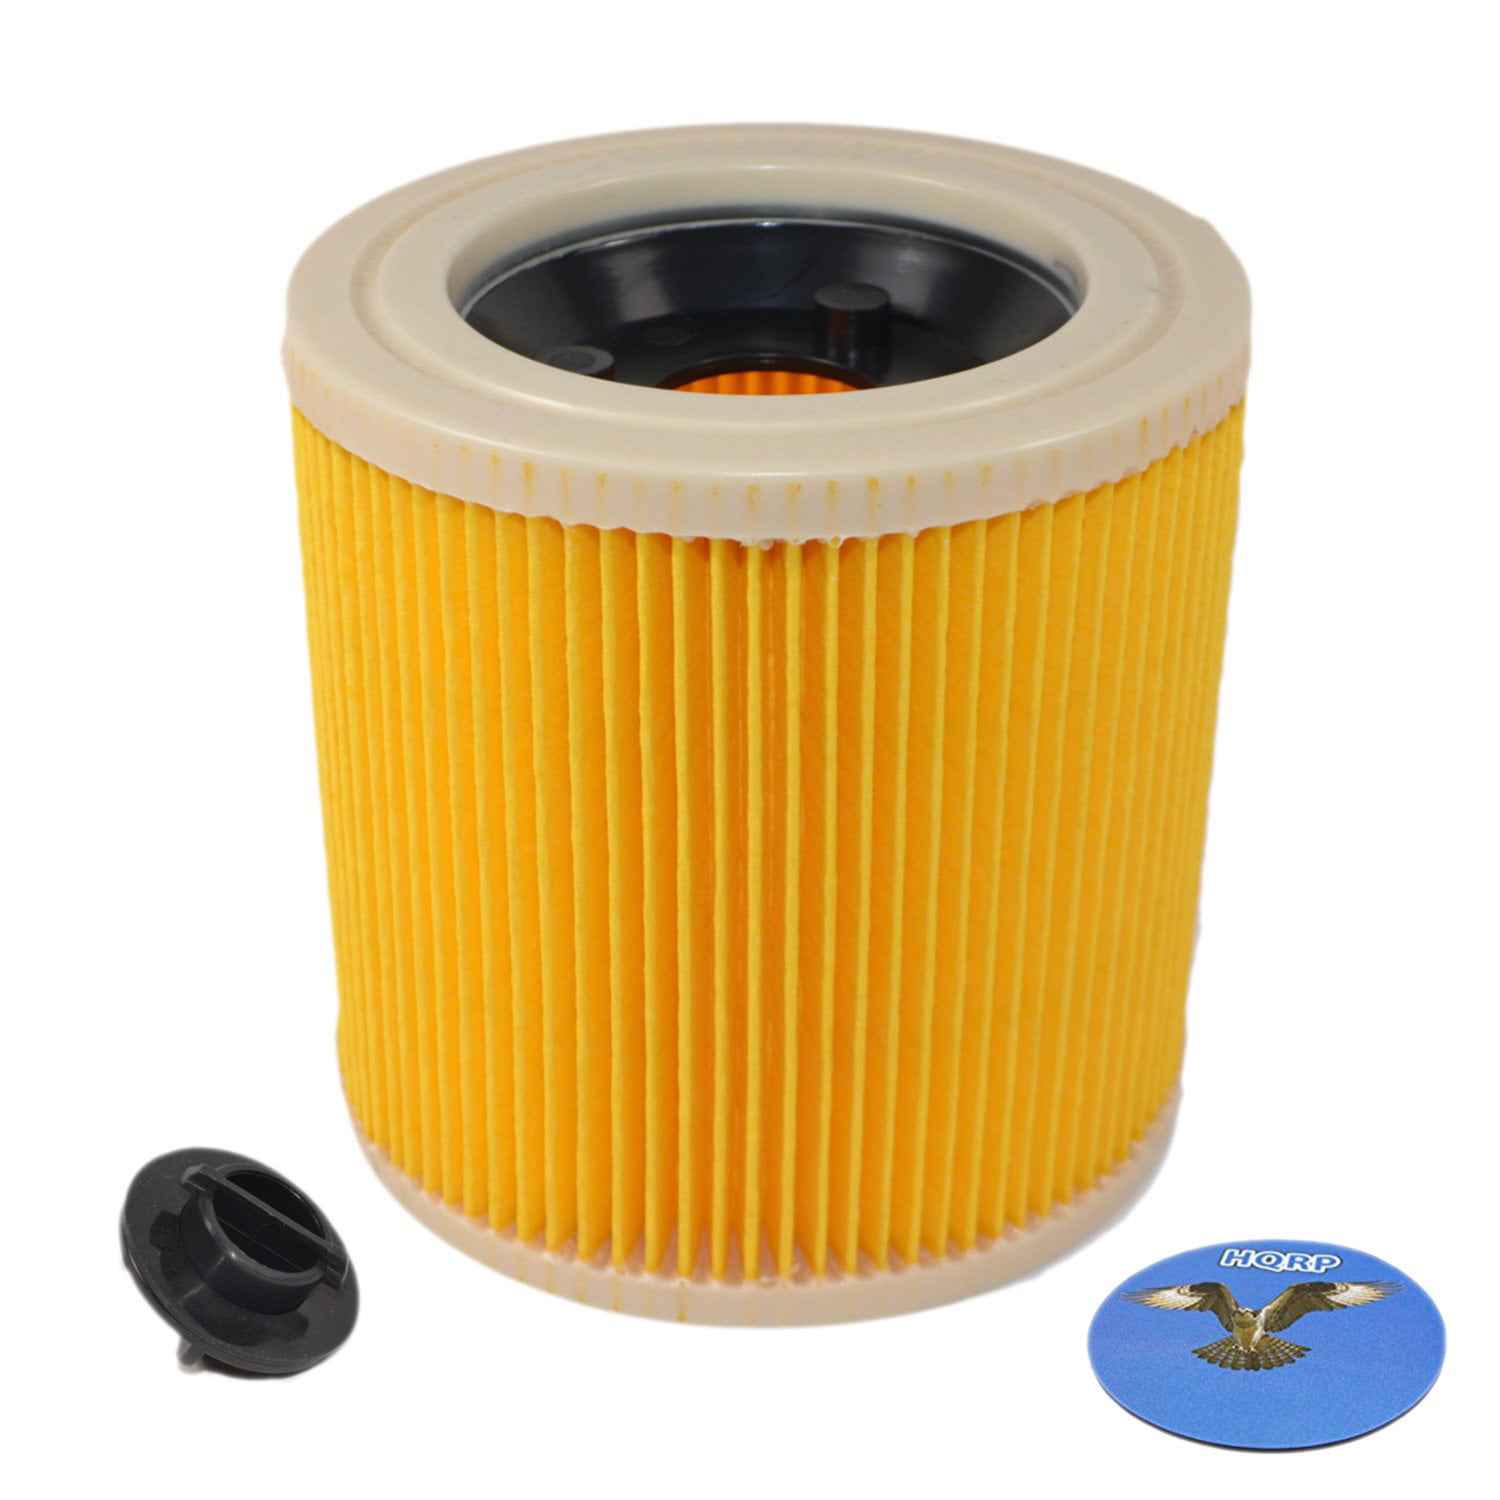 KARCHER Vacuum Foam Filter Sponge Wet Dry Hoover Insert A2200 A2201 A2204 A2206X 